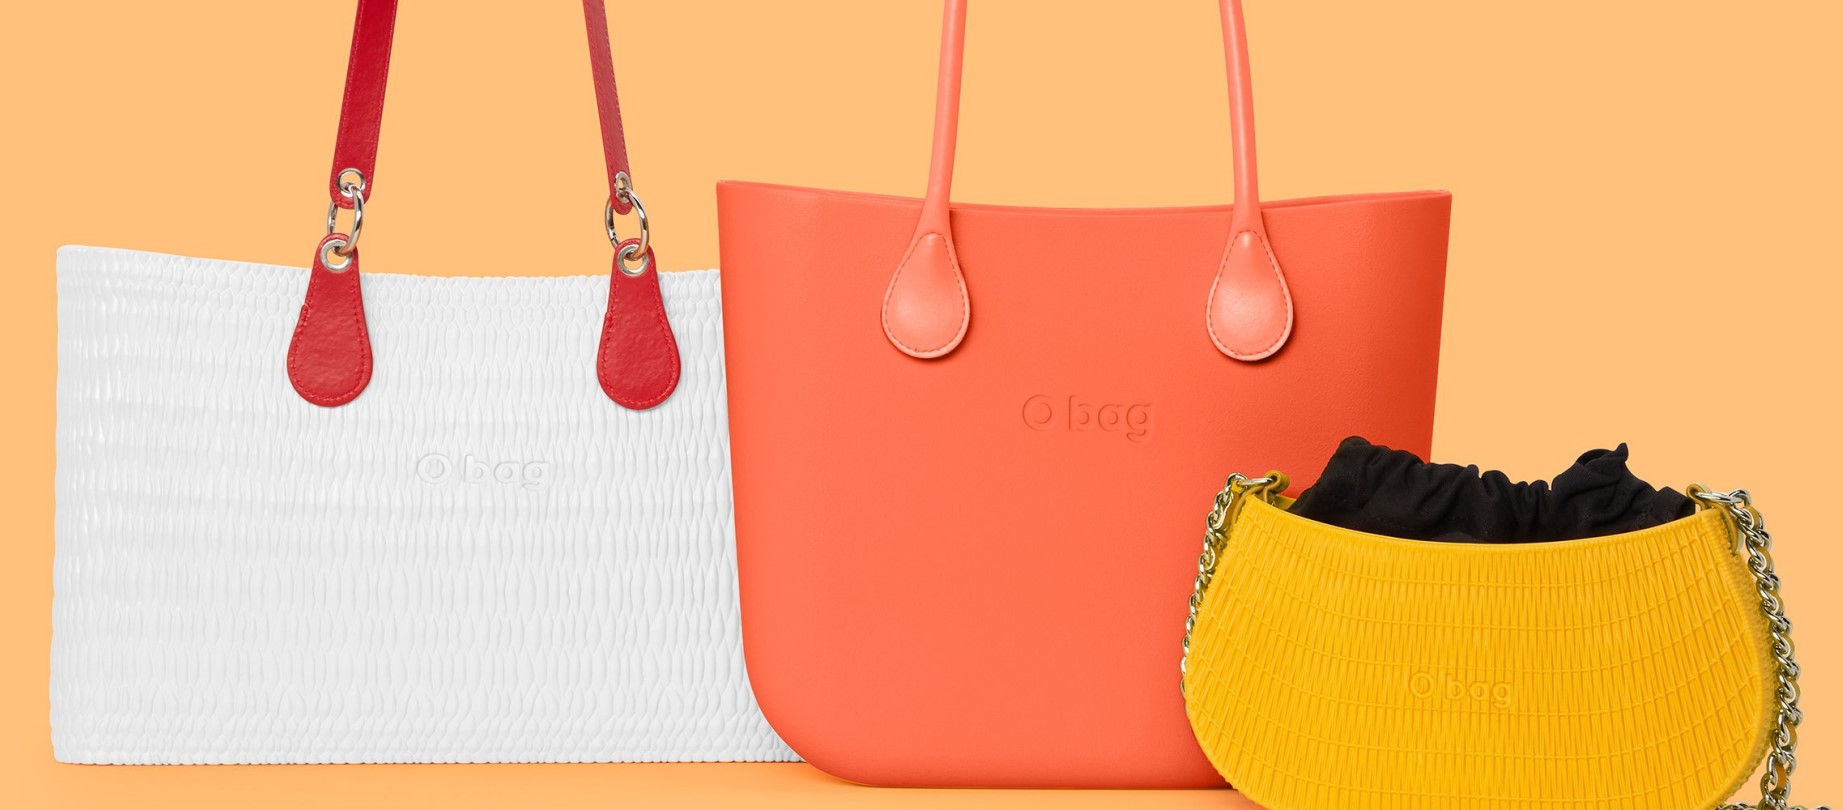 Bolsas O Bag a precios outlet | by Zalando